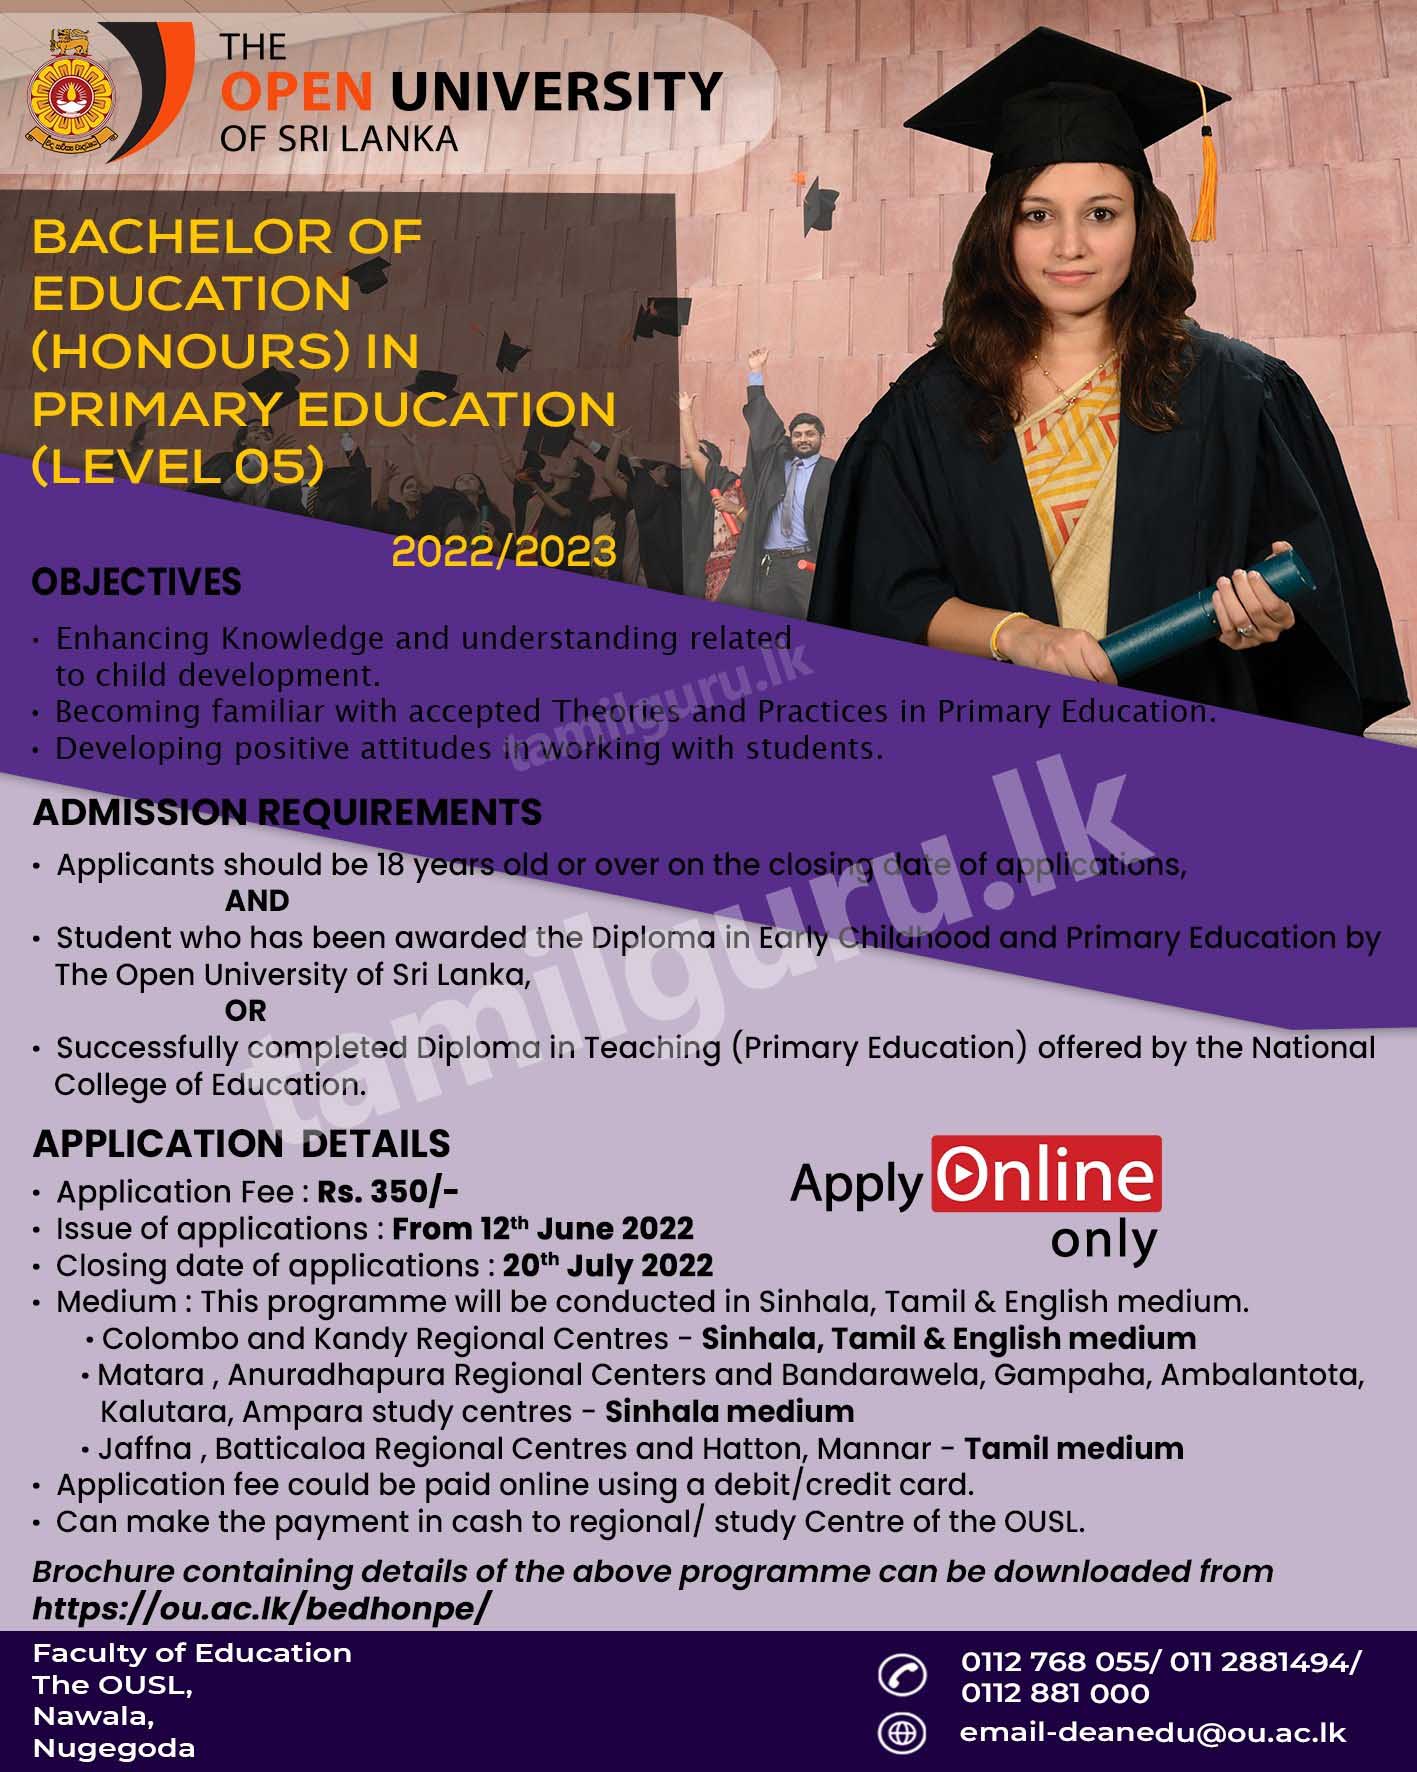 Bachelor of Education (Honours) in Primary Education (Level 05) Degree Programme 2022/2023 - The Open University of Sri Lanka (OUSL)